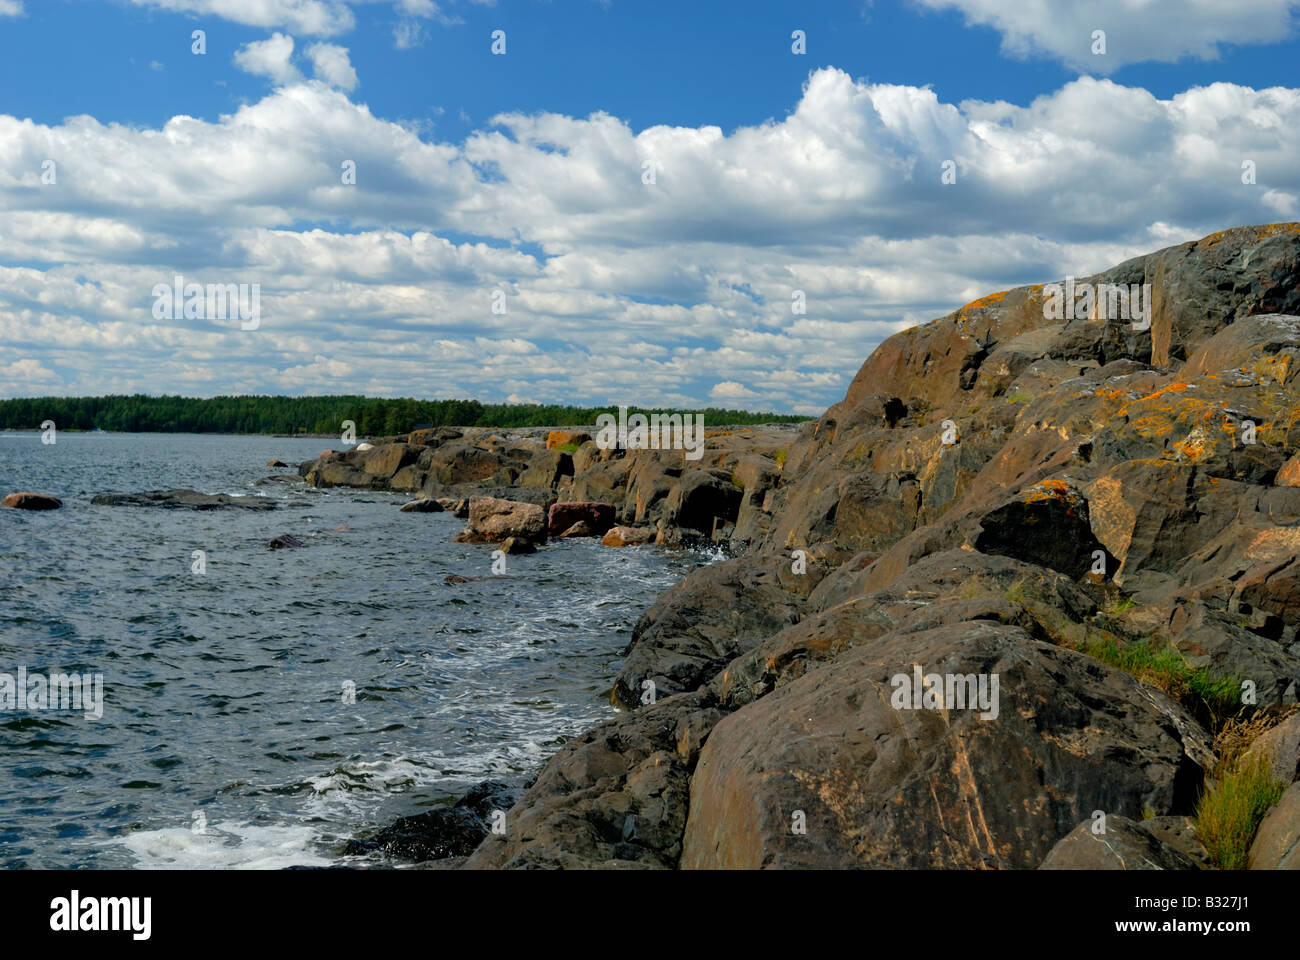 A rocky seashore in the Porvoo Archipelago, Porvoo, Finland, Europe. Stock Photo